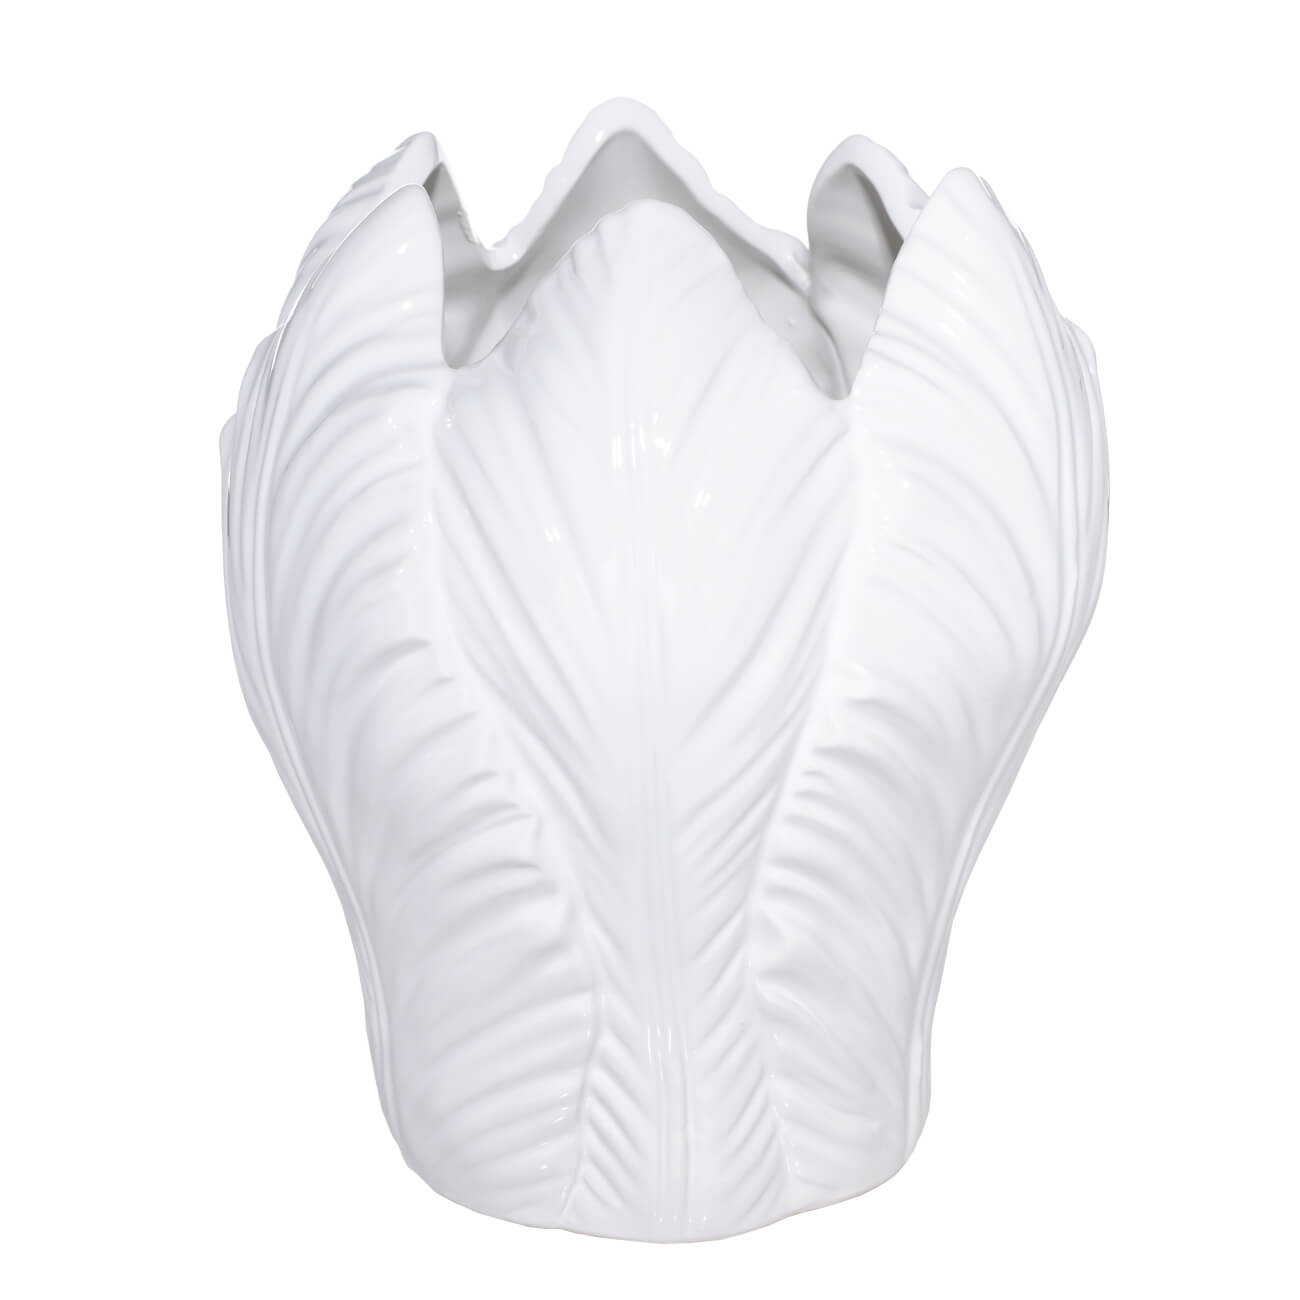 Ваза для цветов, 21 см, керамика, белая, Тюльпан, Tulip ваза для цветов 19 см декоративная керамика белая женский бюст torso